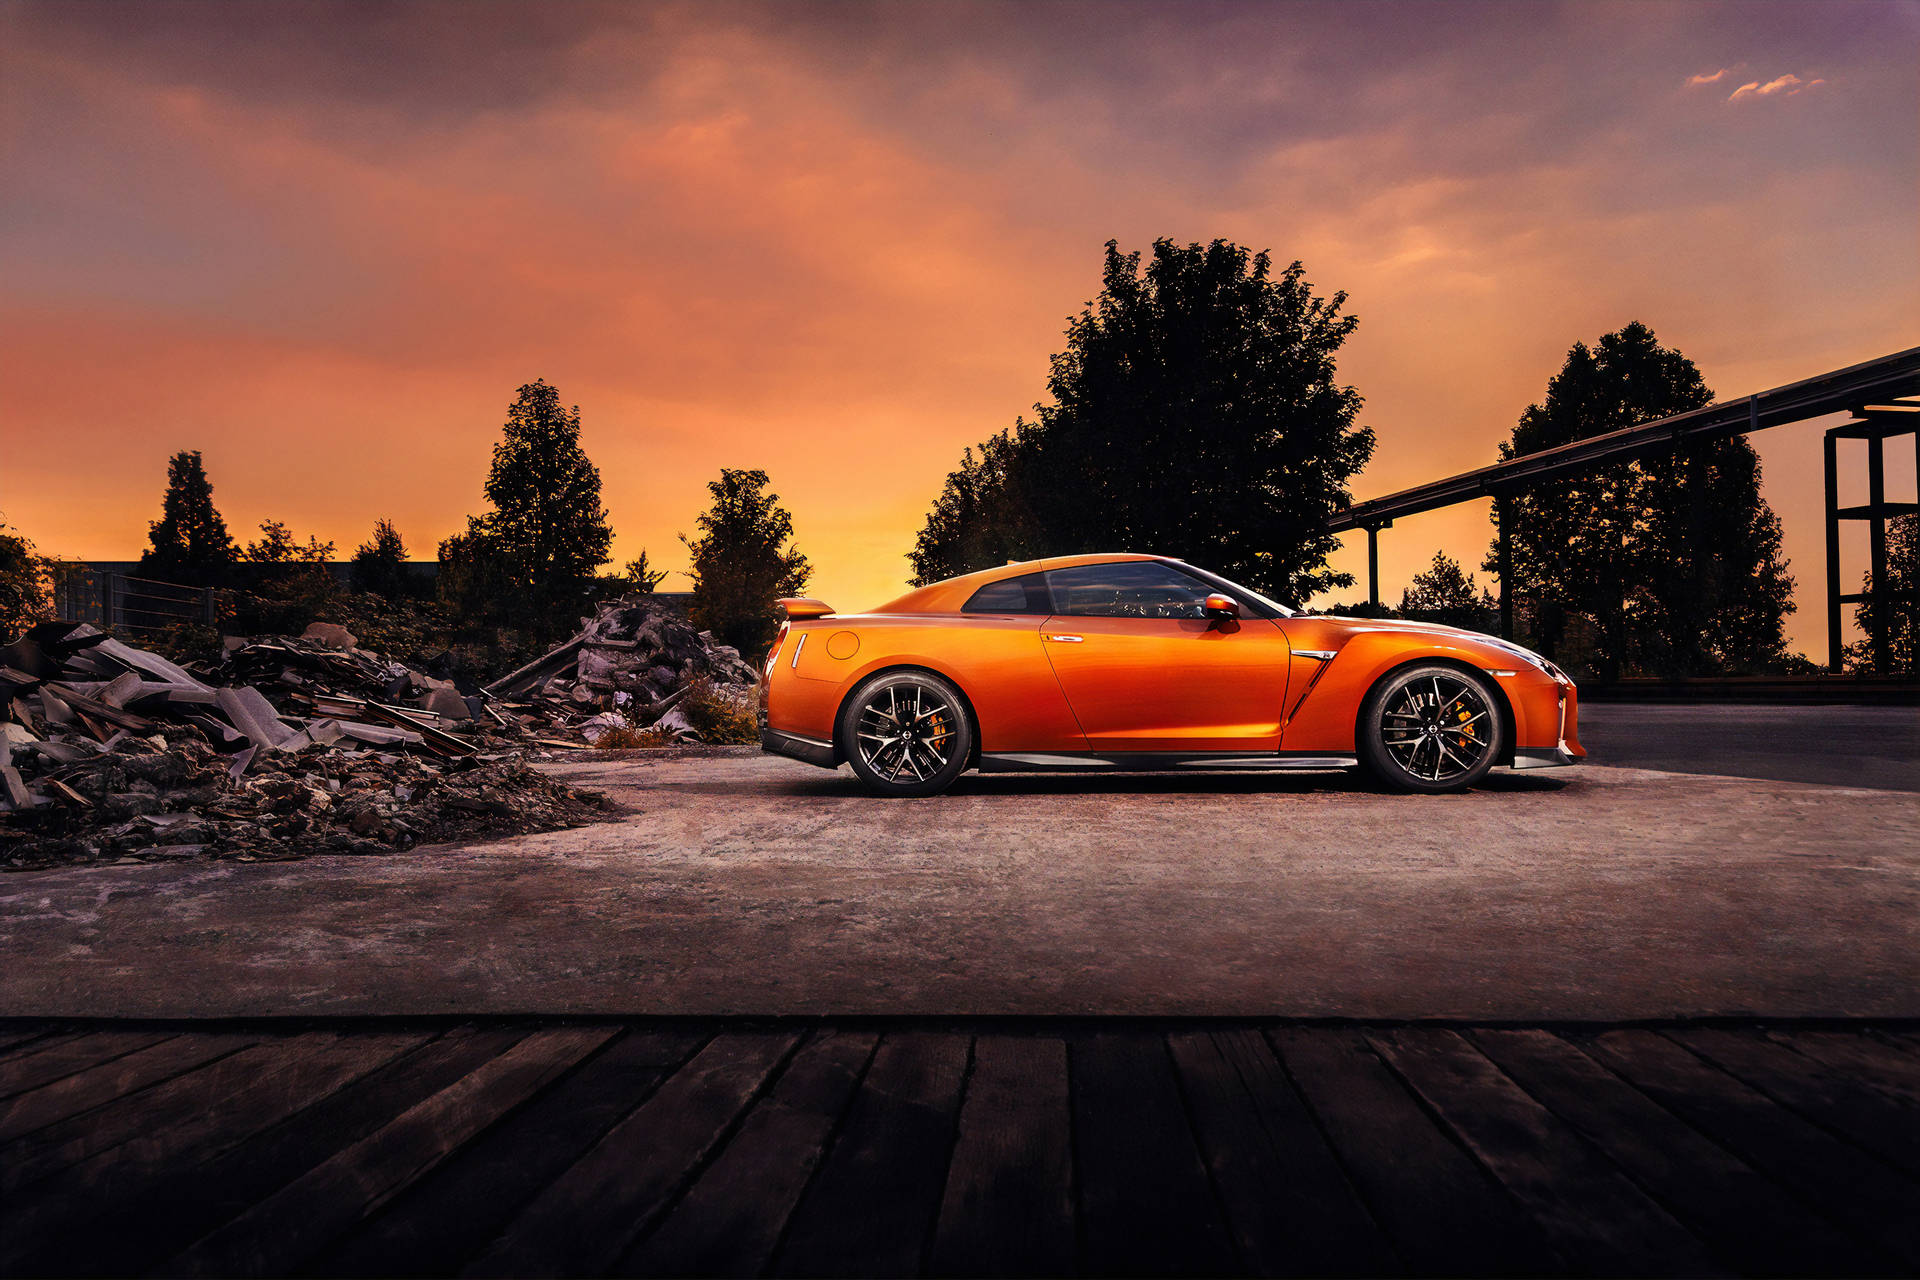 Sunset And Orange Nissan GT R 4K Wallpaper